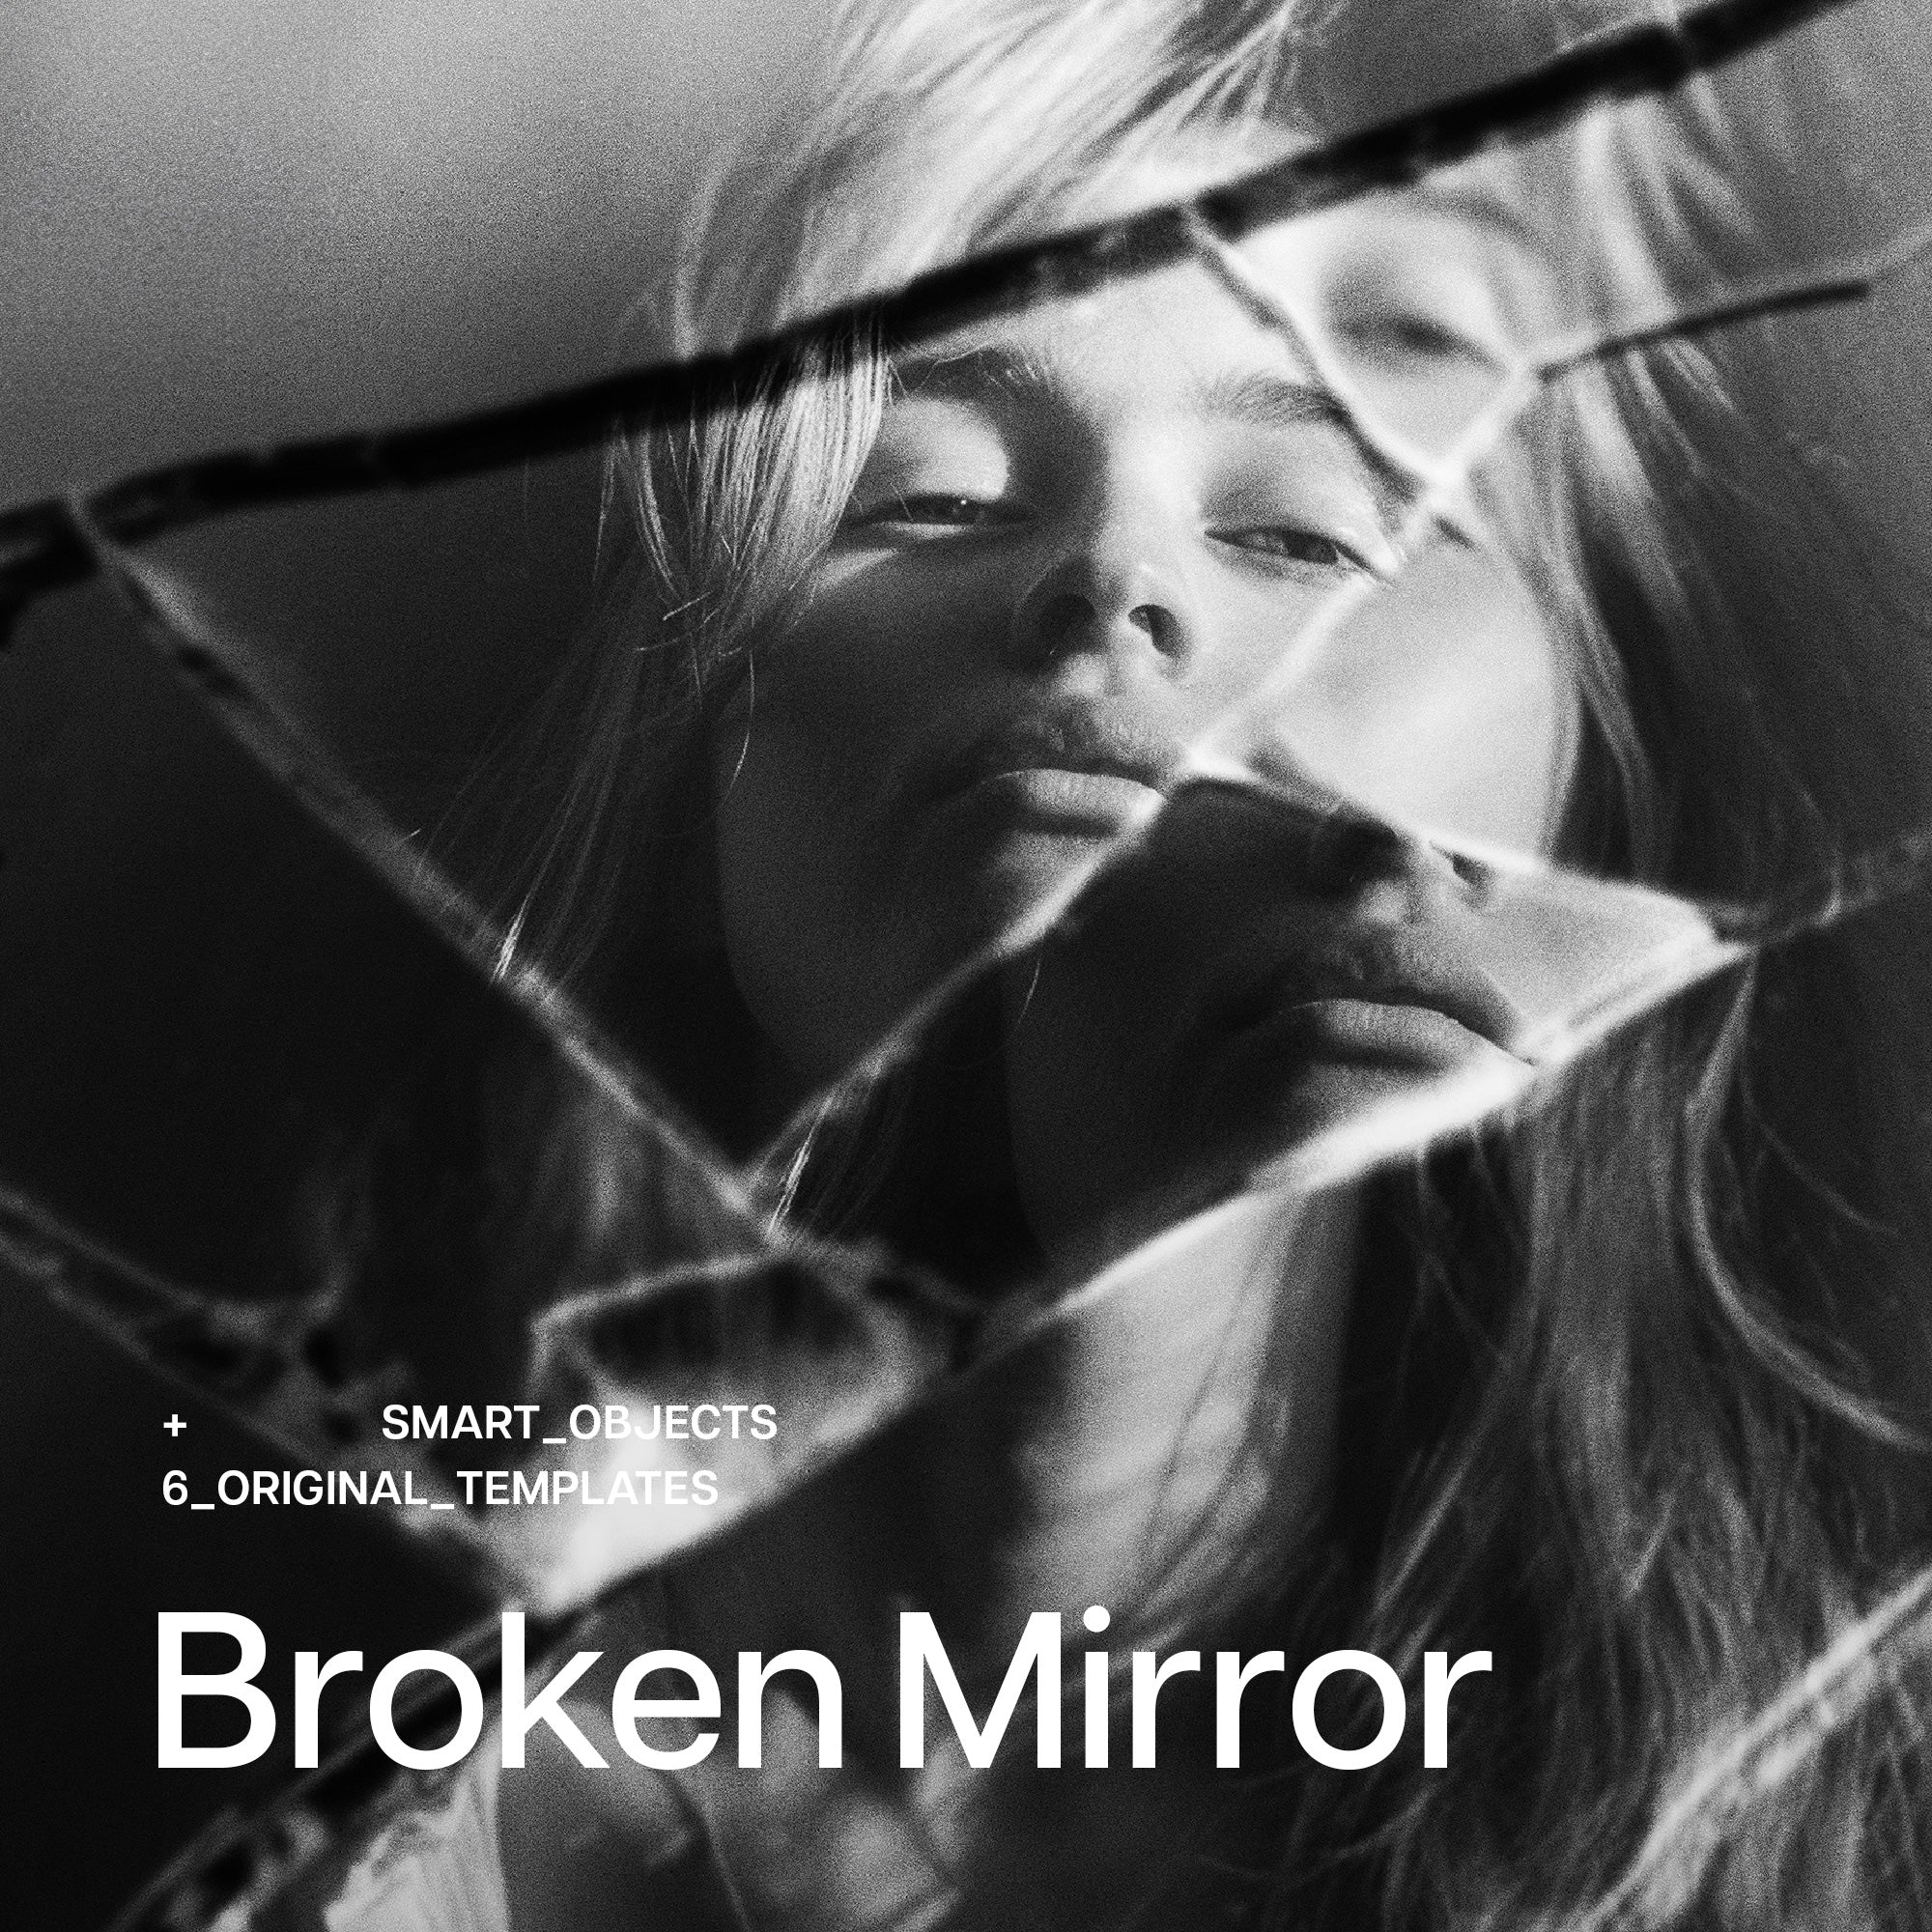 Broken Mirror Photo Effects